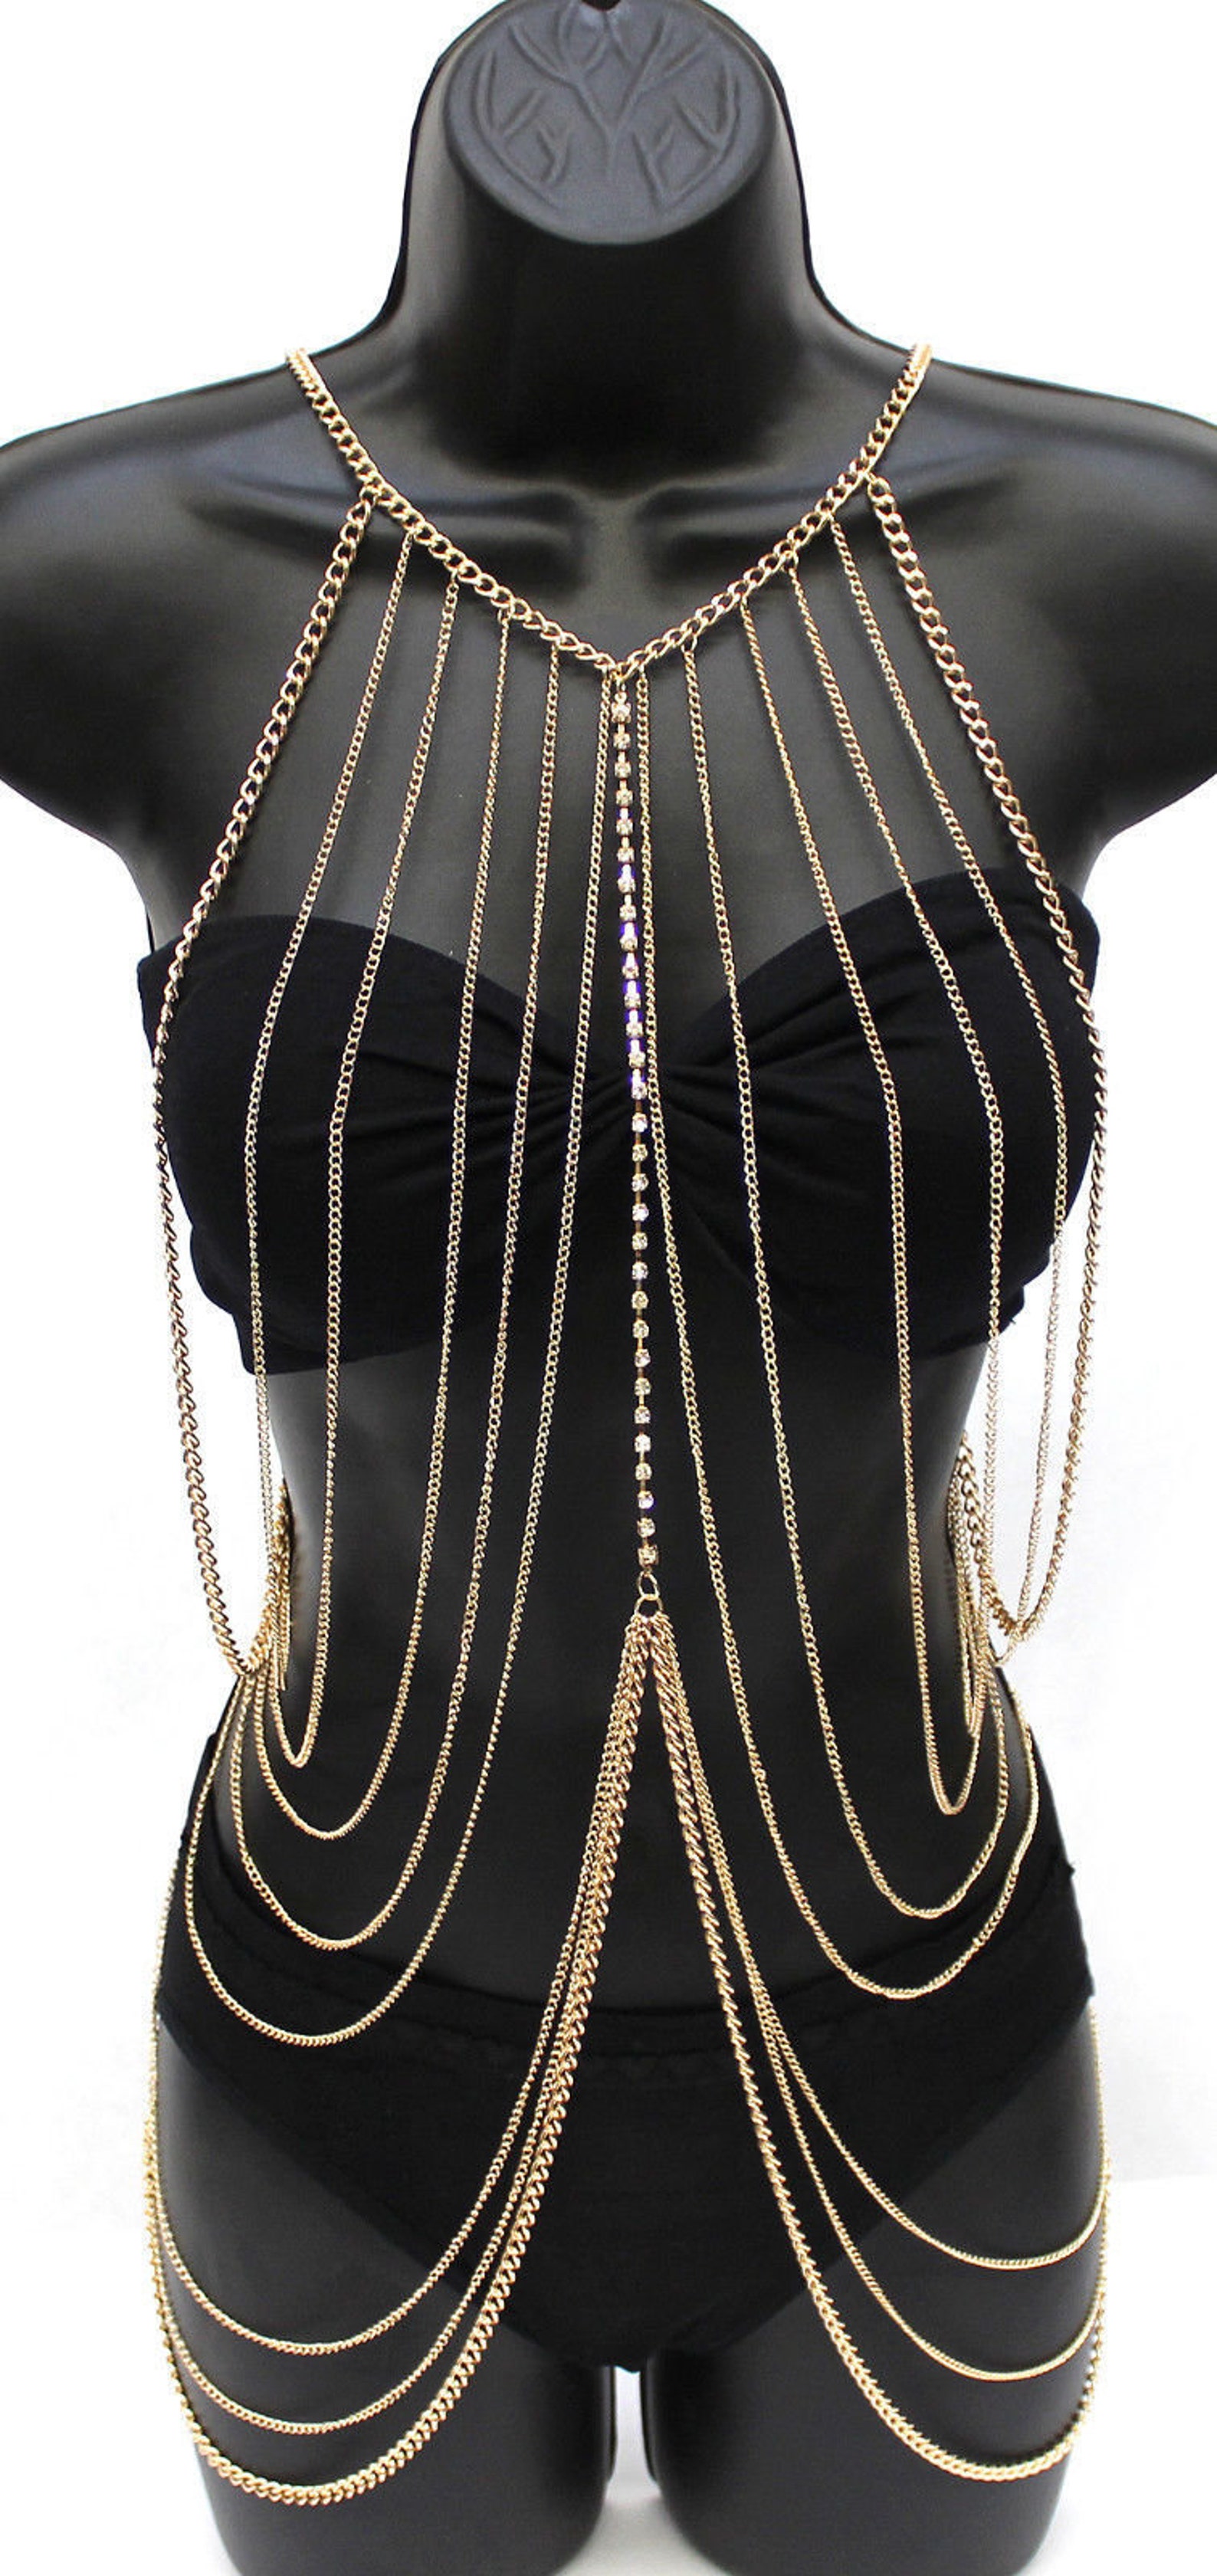 Gold Layered Full Body Bra Necklace Full Body Chain Jewelry Etsy